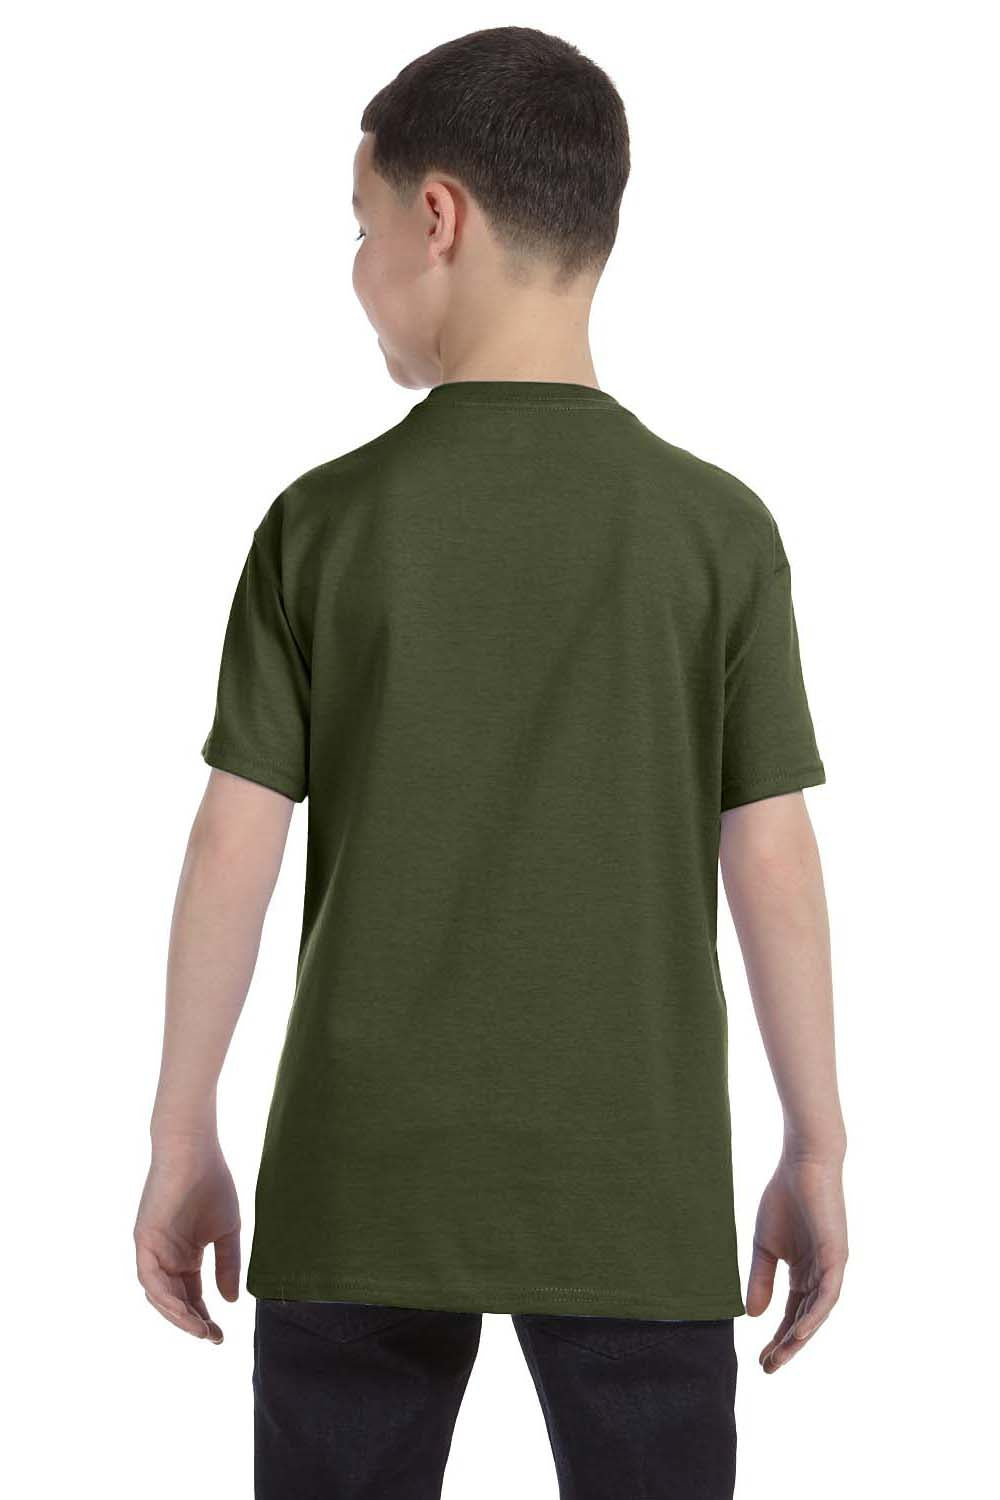 Jerzees 29B Youth Dri-Power Moisture Wicking Short Sleeve Crewneck T-Shirt Military Green Back